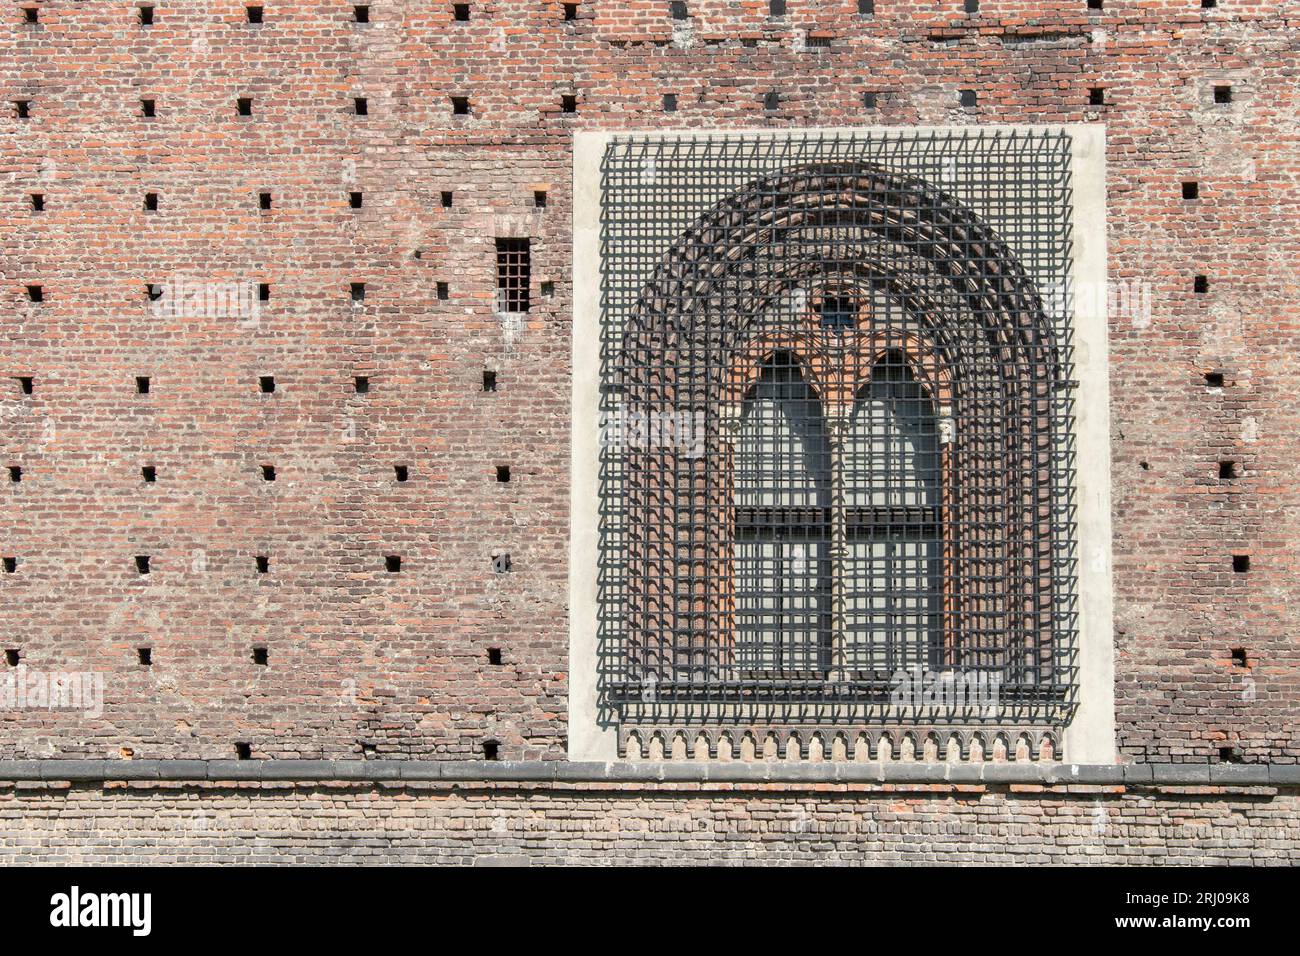 Castello Sforzesco in Milan, exterior of the fortress, Italy, Europe Stock Photo